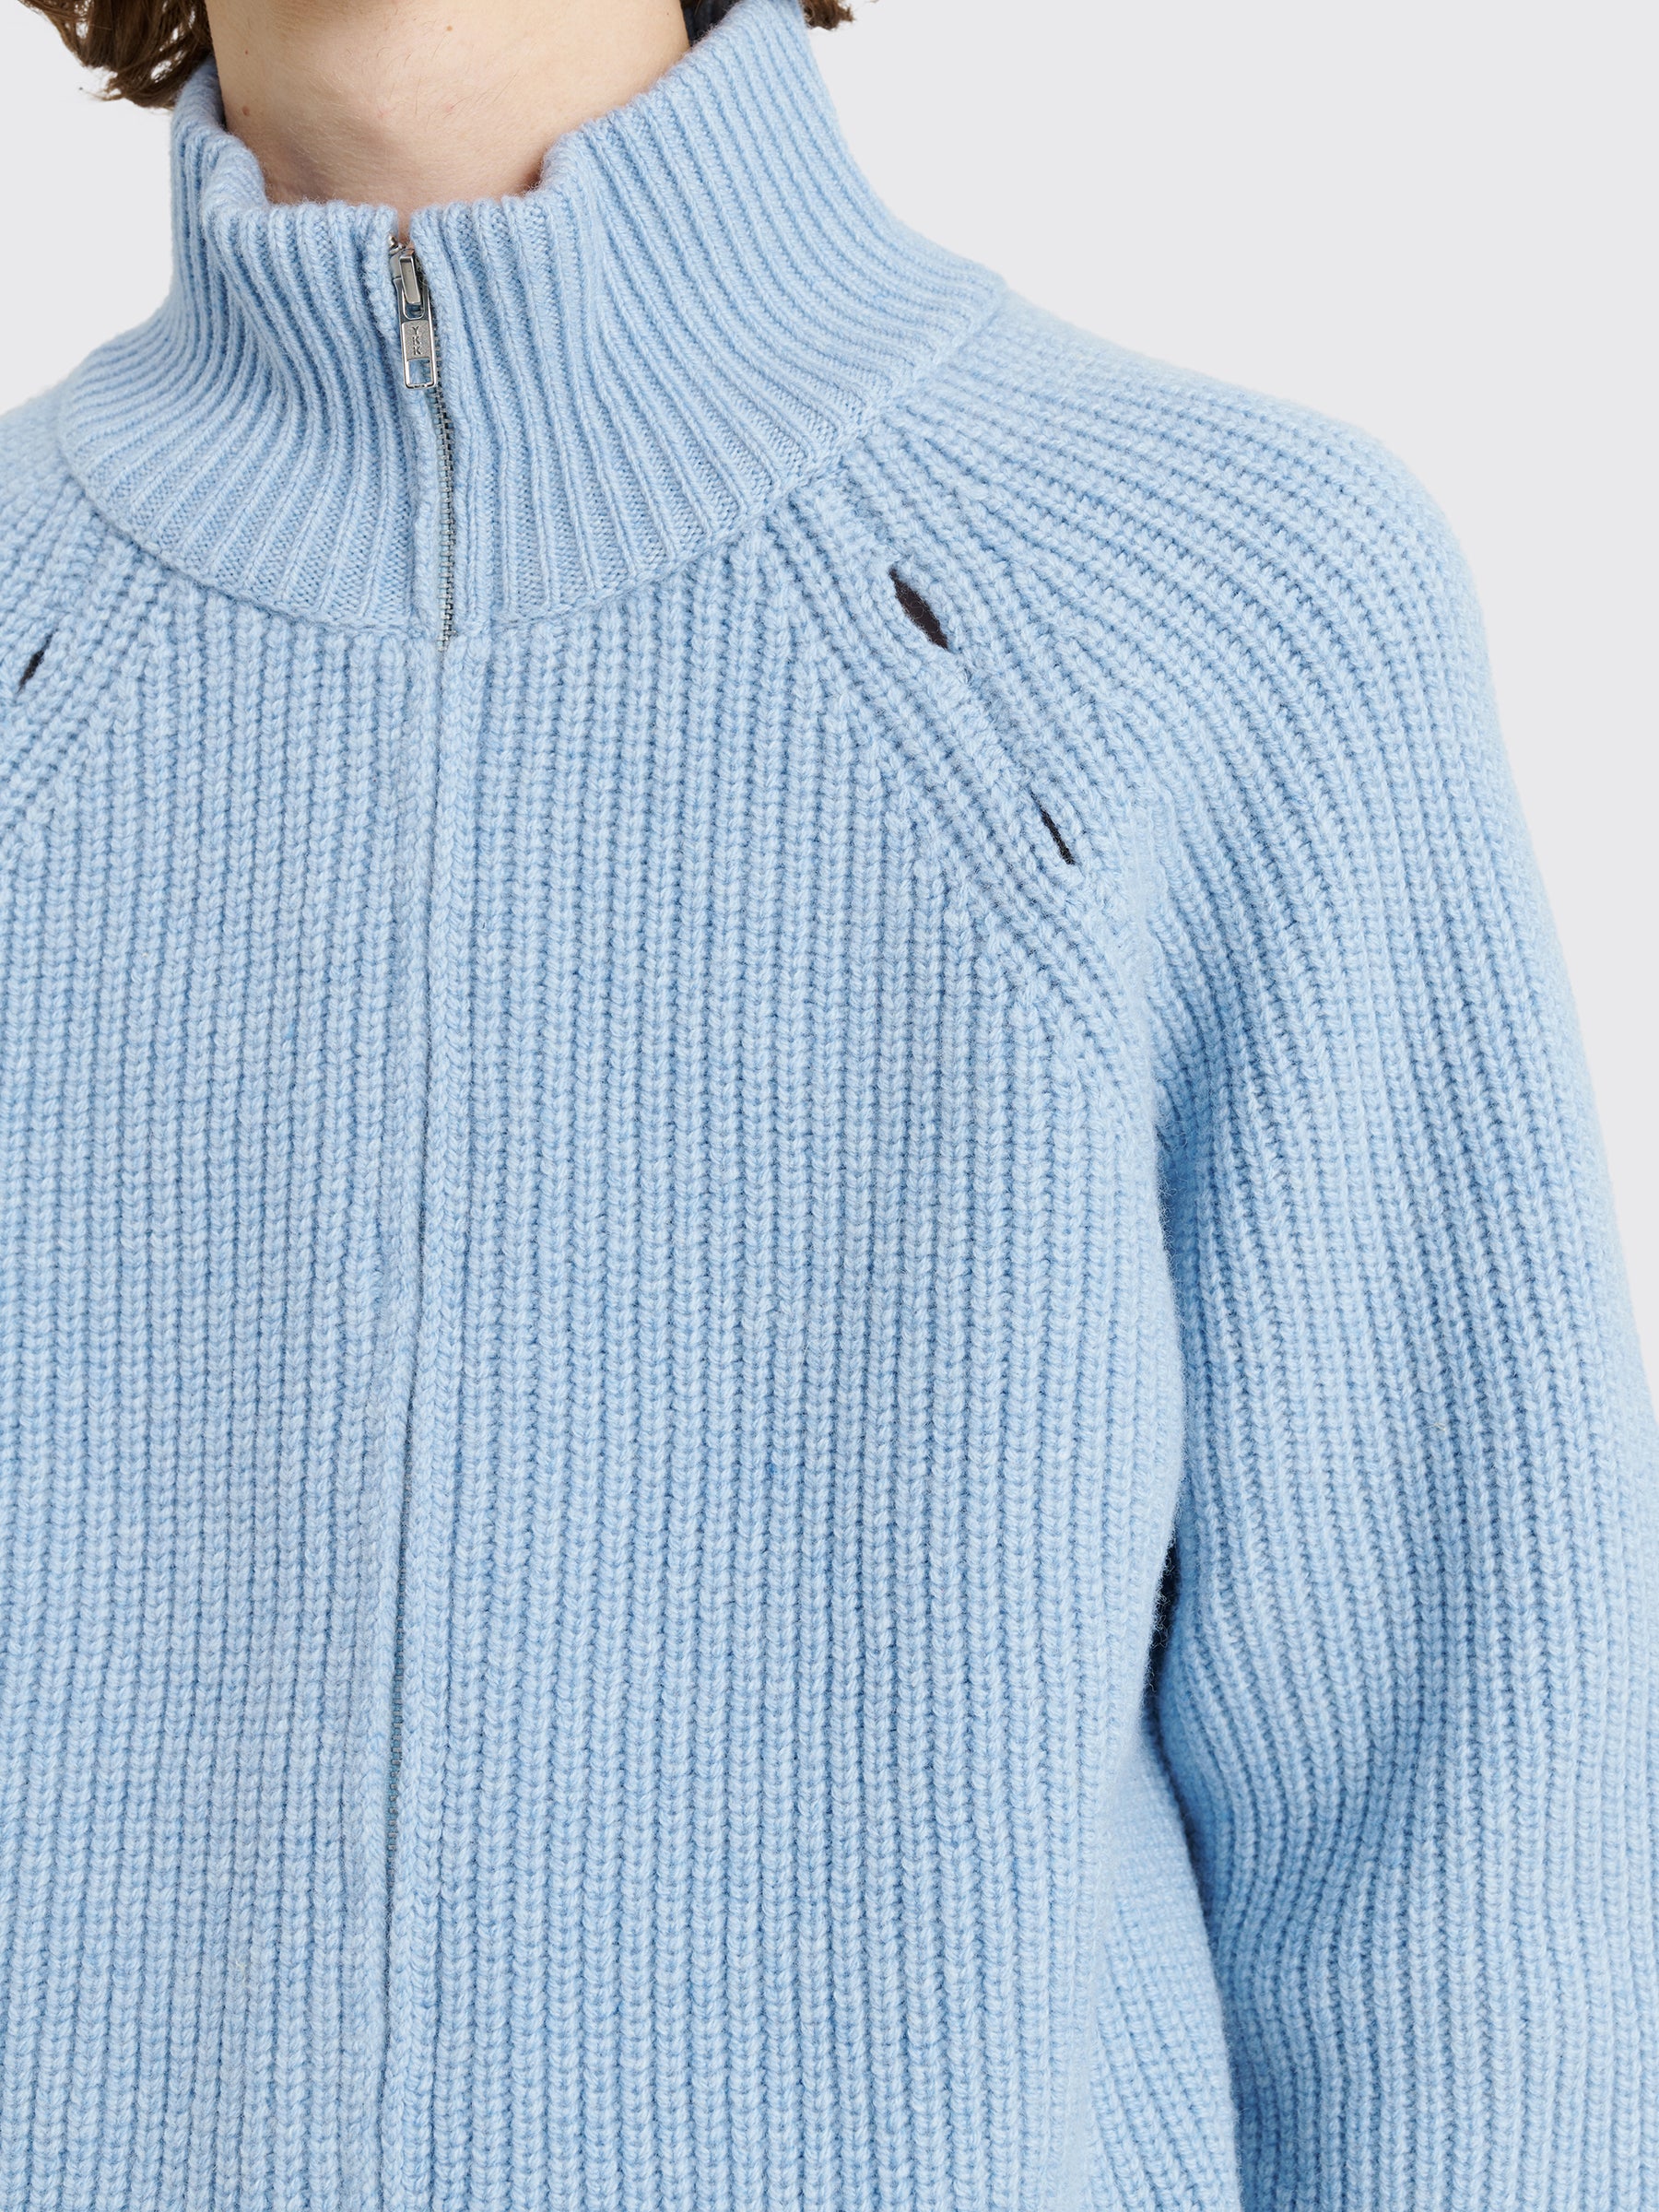 TRÈS BIEN everywear Cut Out Zip Knit Merino Cashmere Light Blue